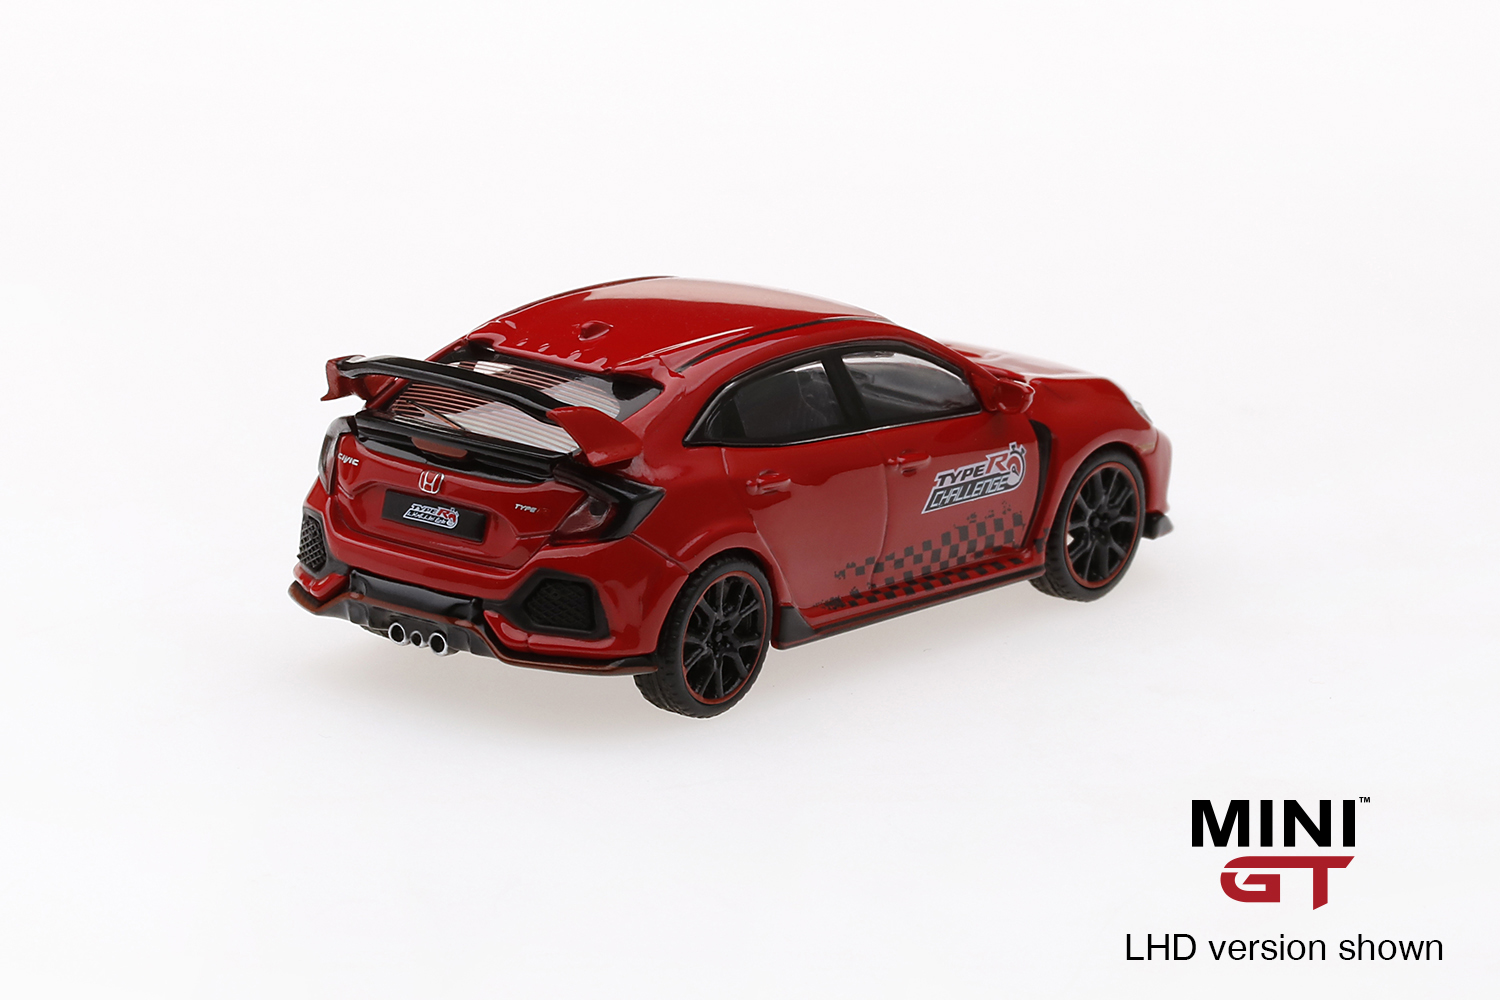 MINI GT 1/64 Honda シビック Type R Time Attack 2018 左ハンドル | ホビーショップタムタム 通販 ミニカー